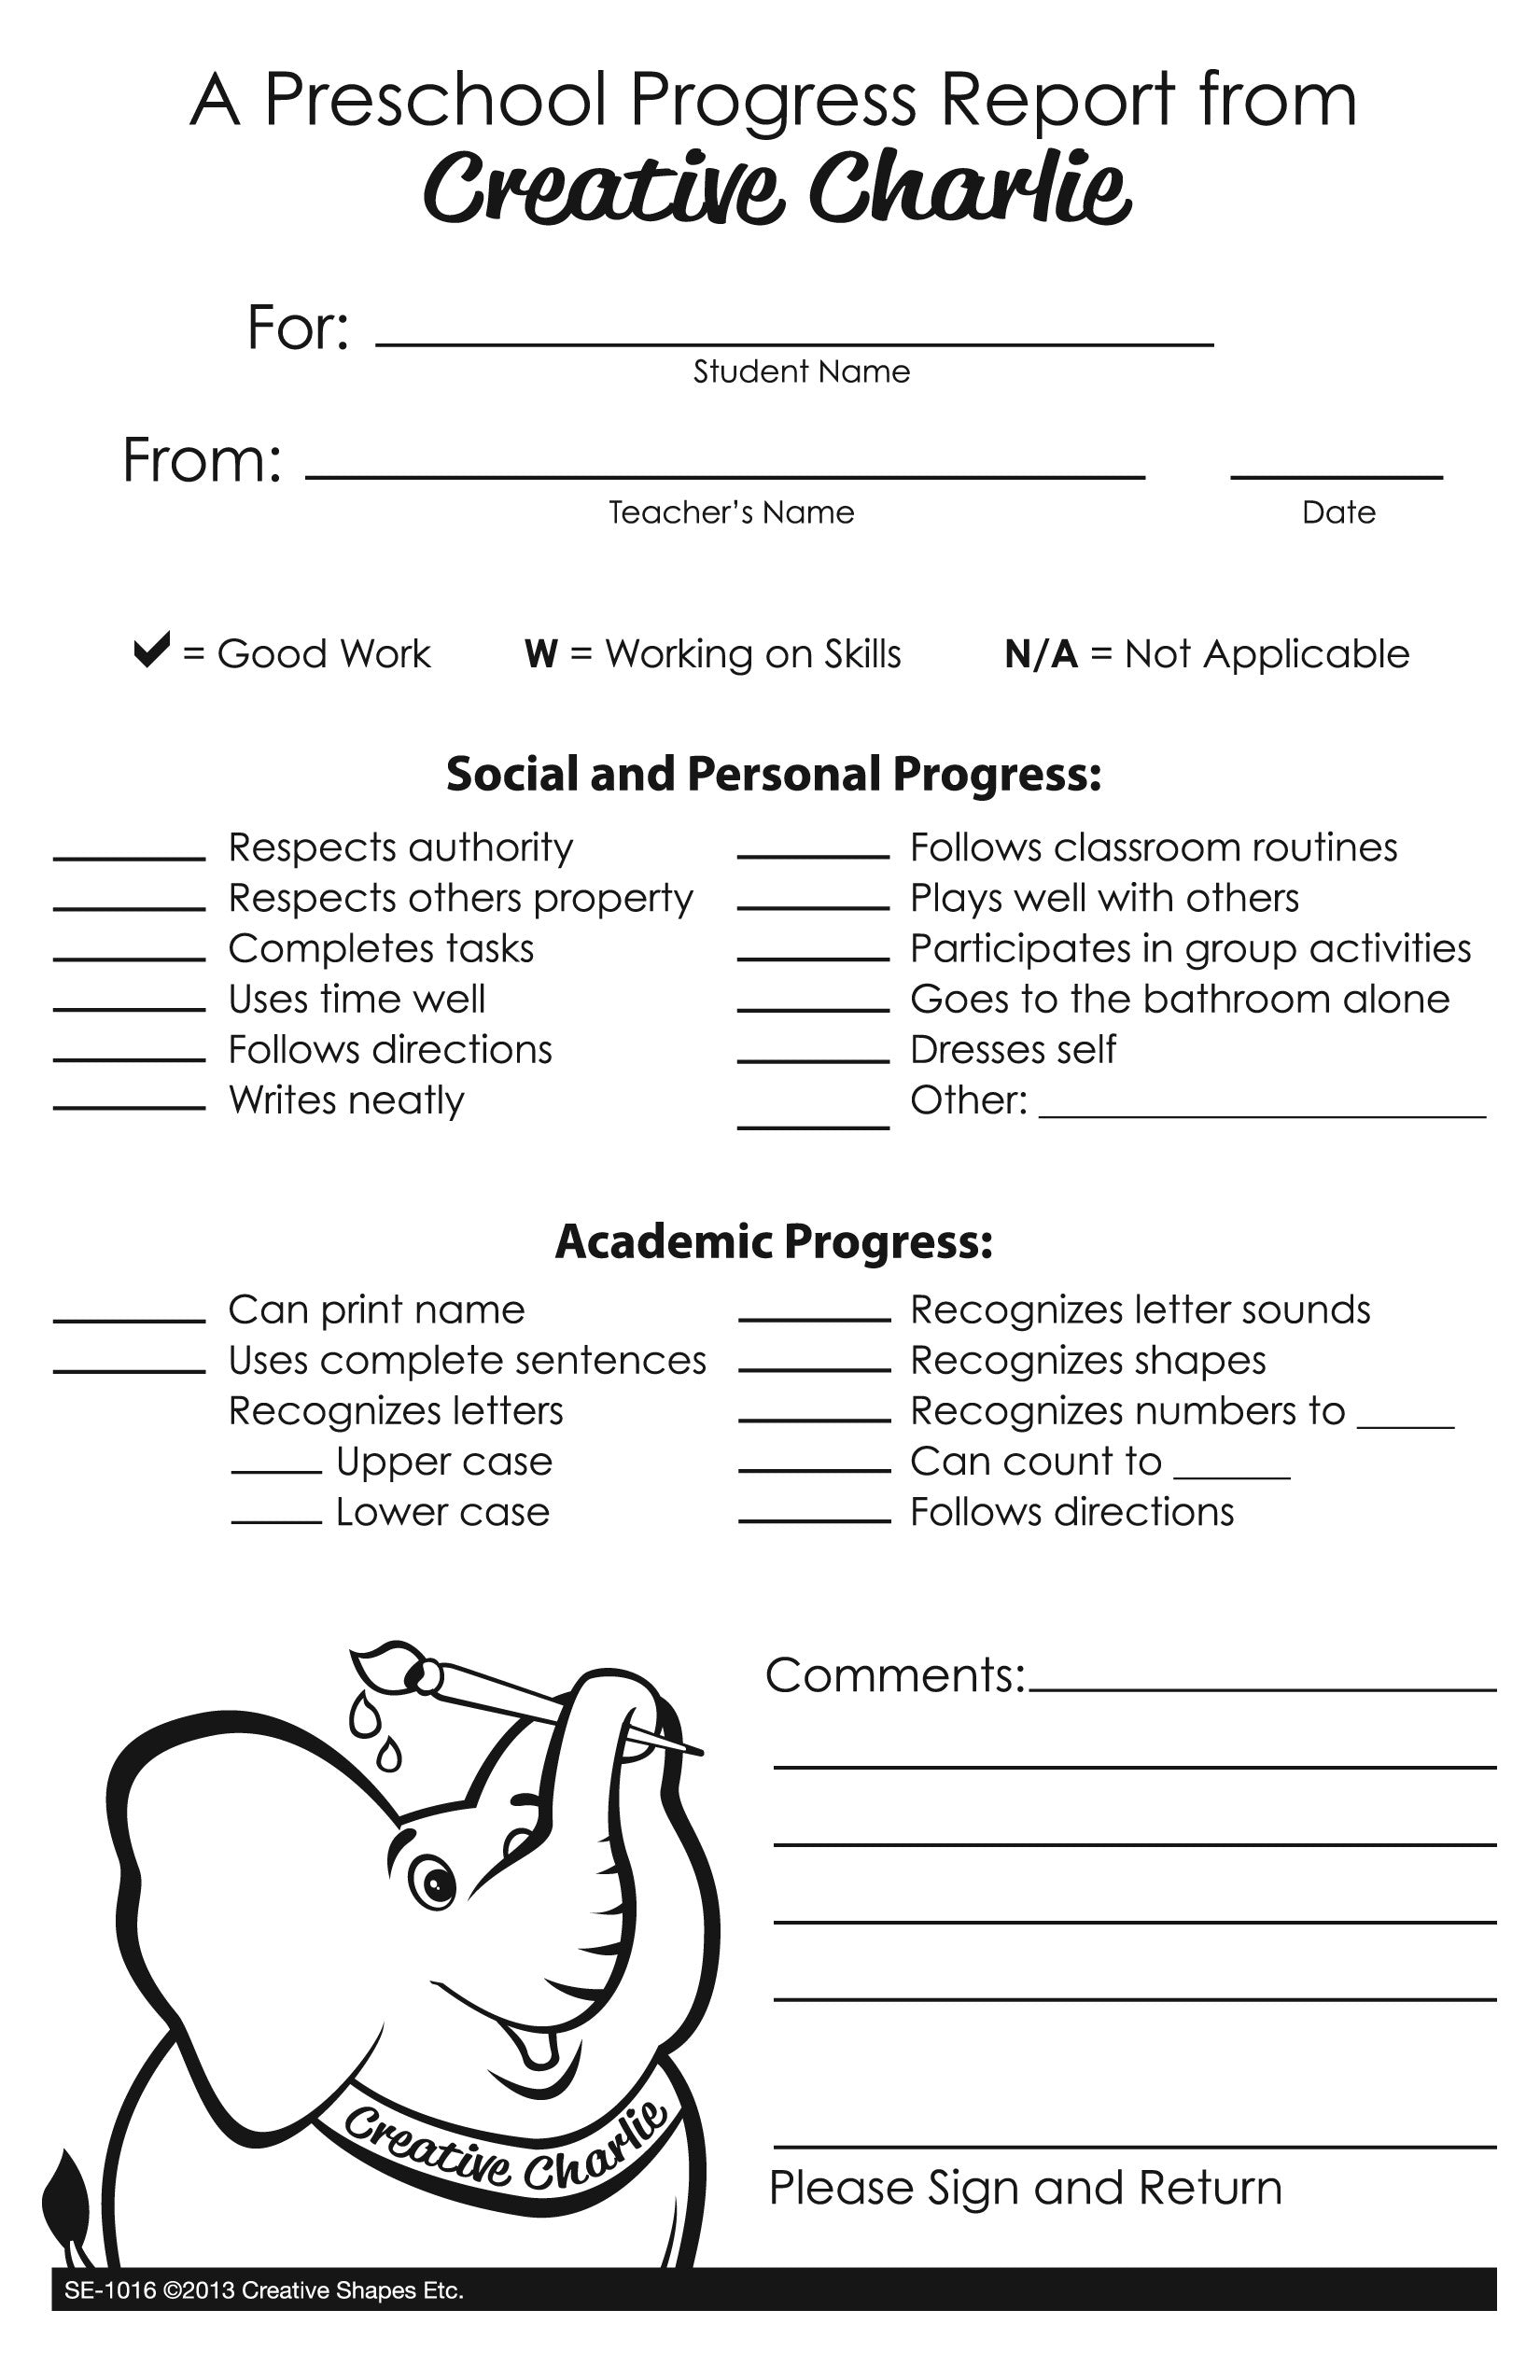 Notes From Teachers – Creative Charlie Preschool Progress Report With Preschool Progress Report Template